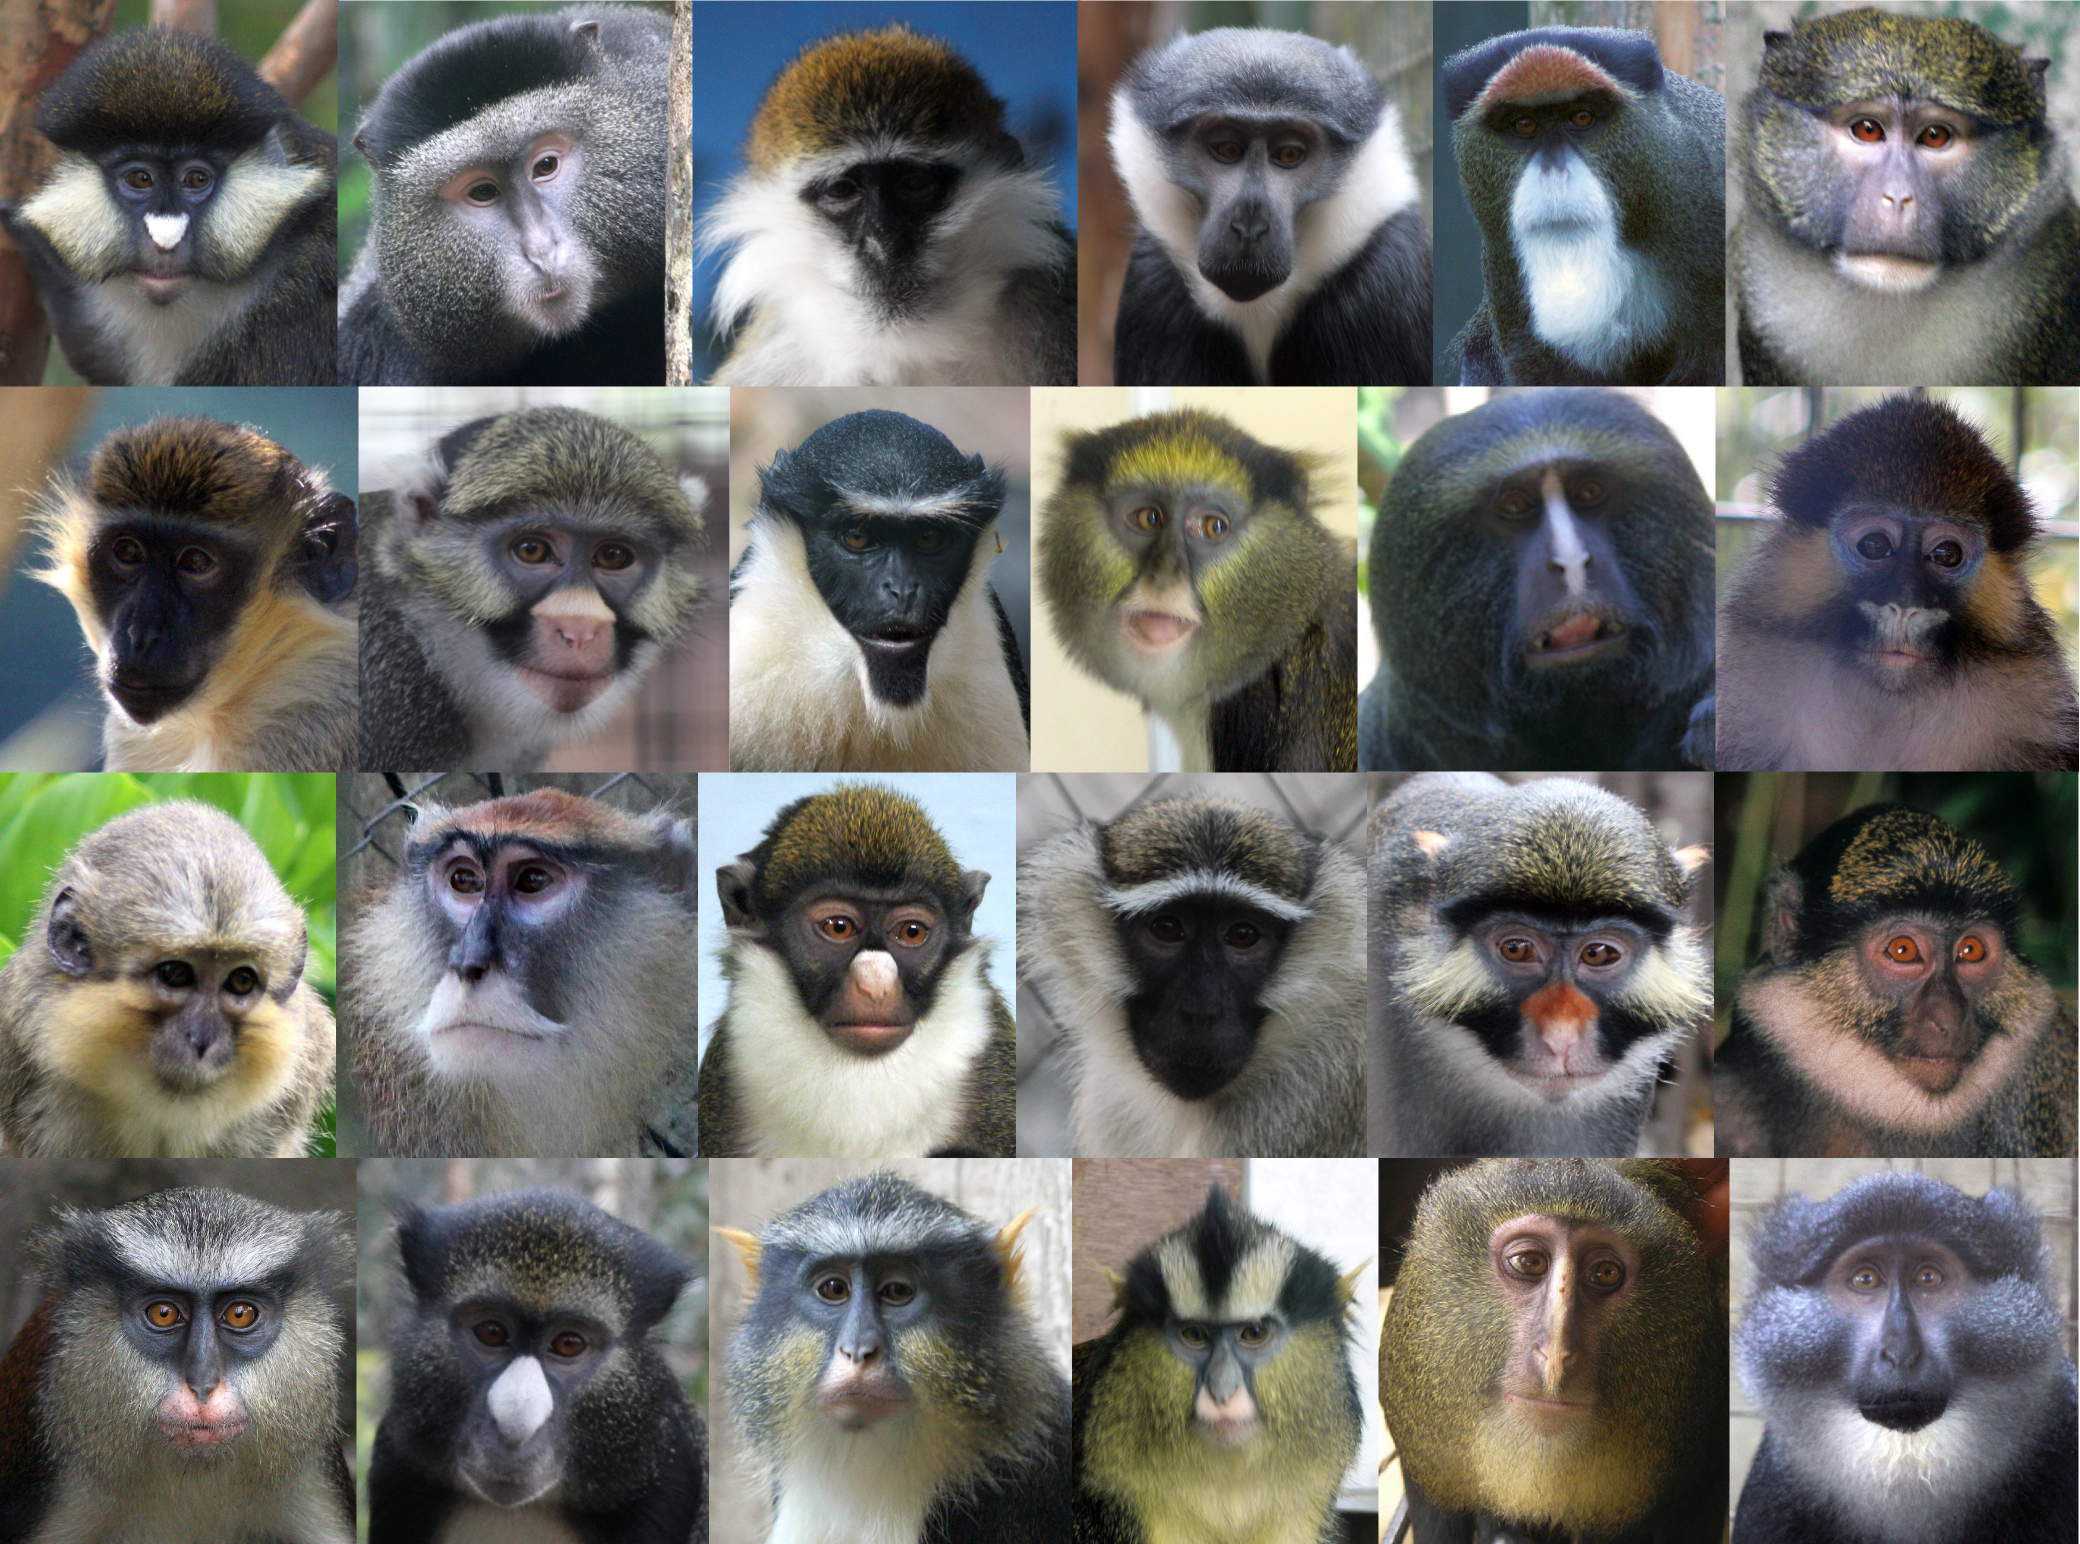 Species of Monkey